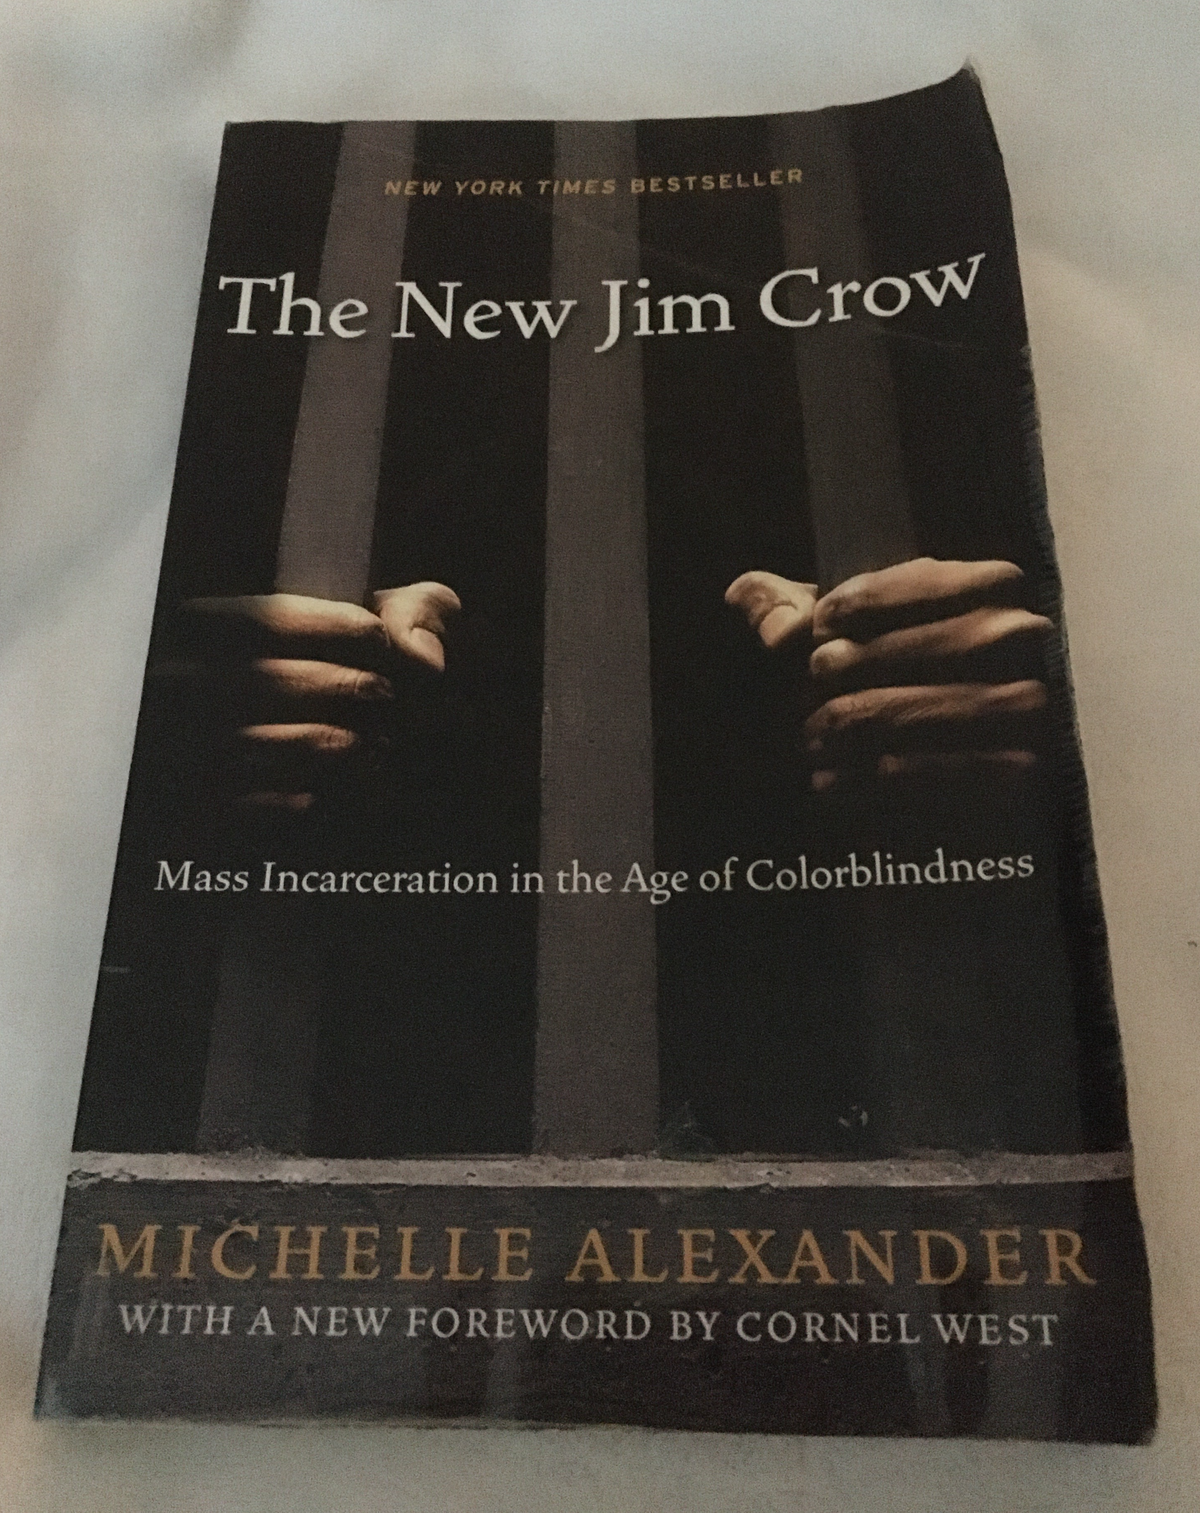 The New Jim Crow by Michelle Alexander, book, Ten Dollar Books, Ten Dollar Books